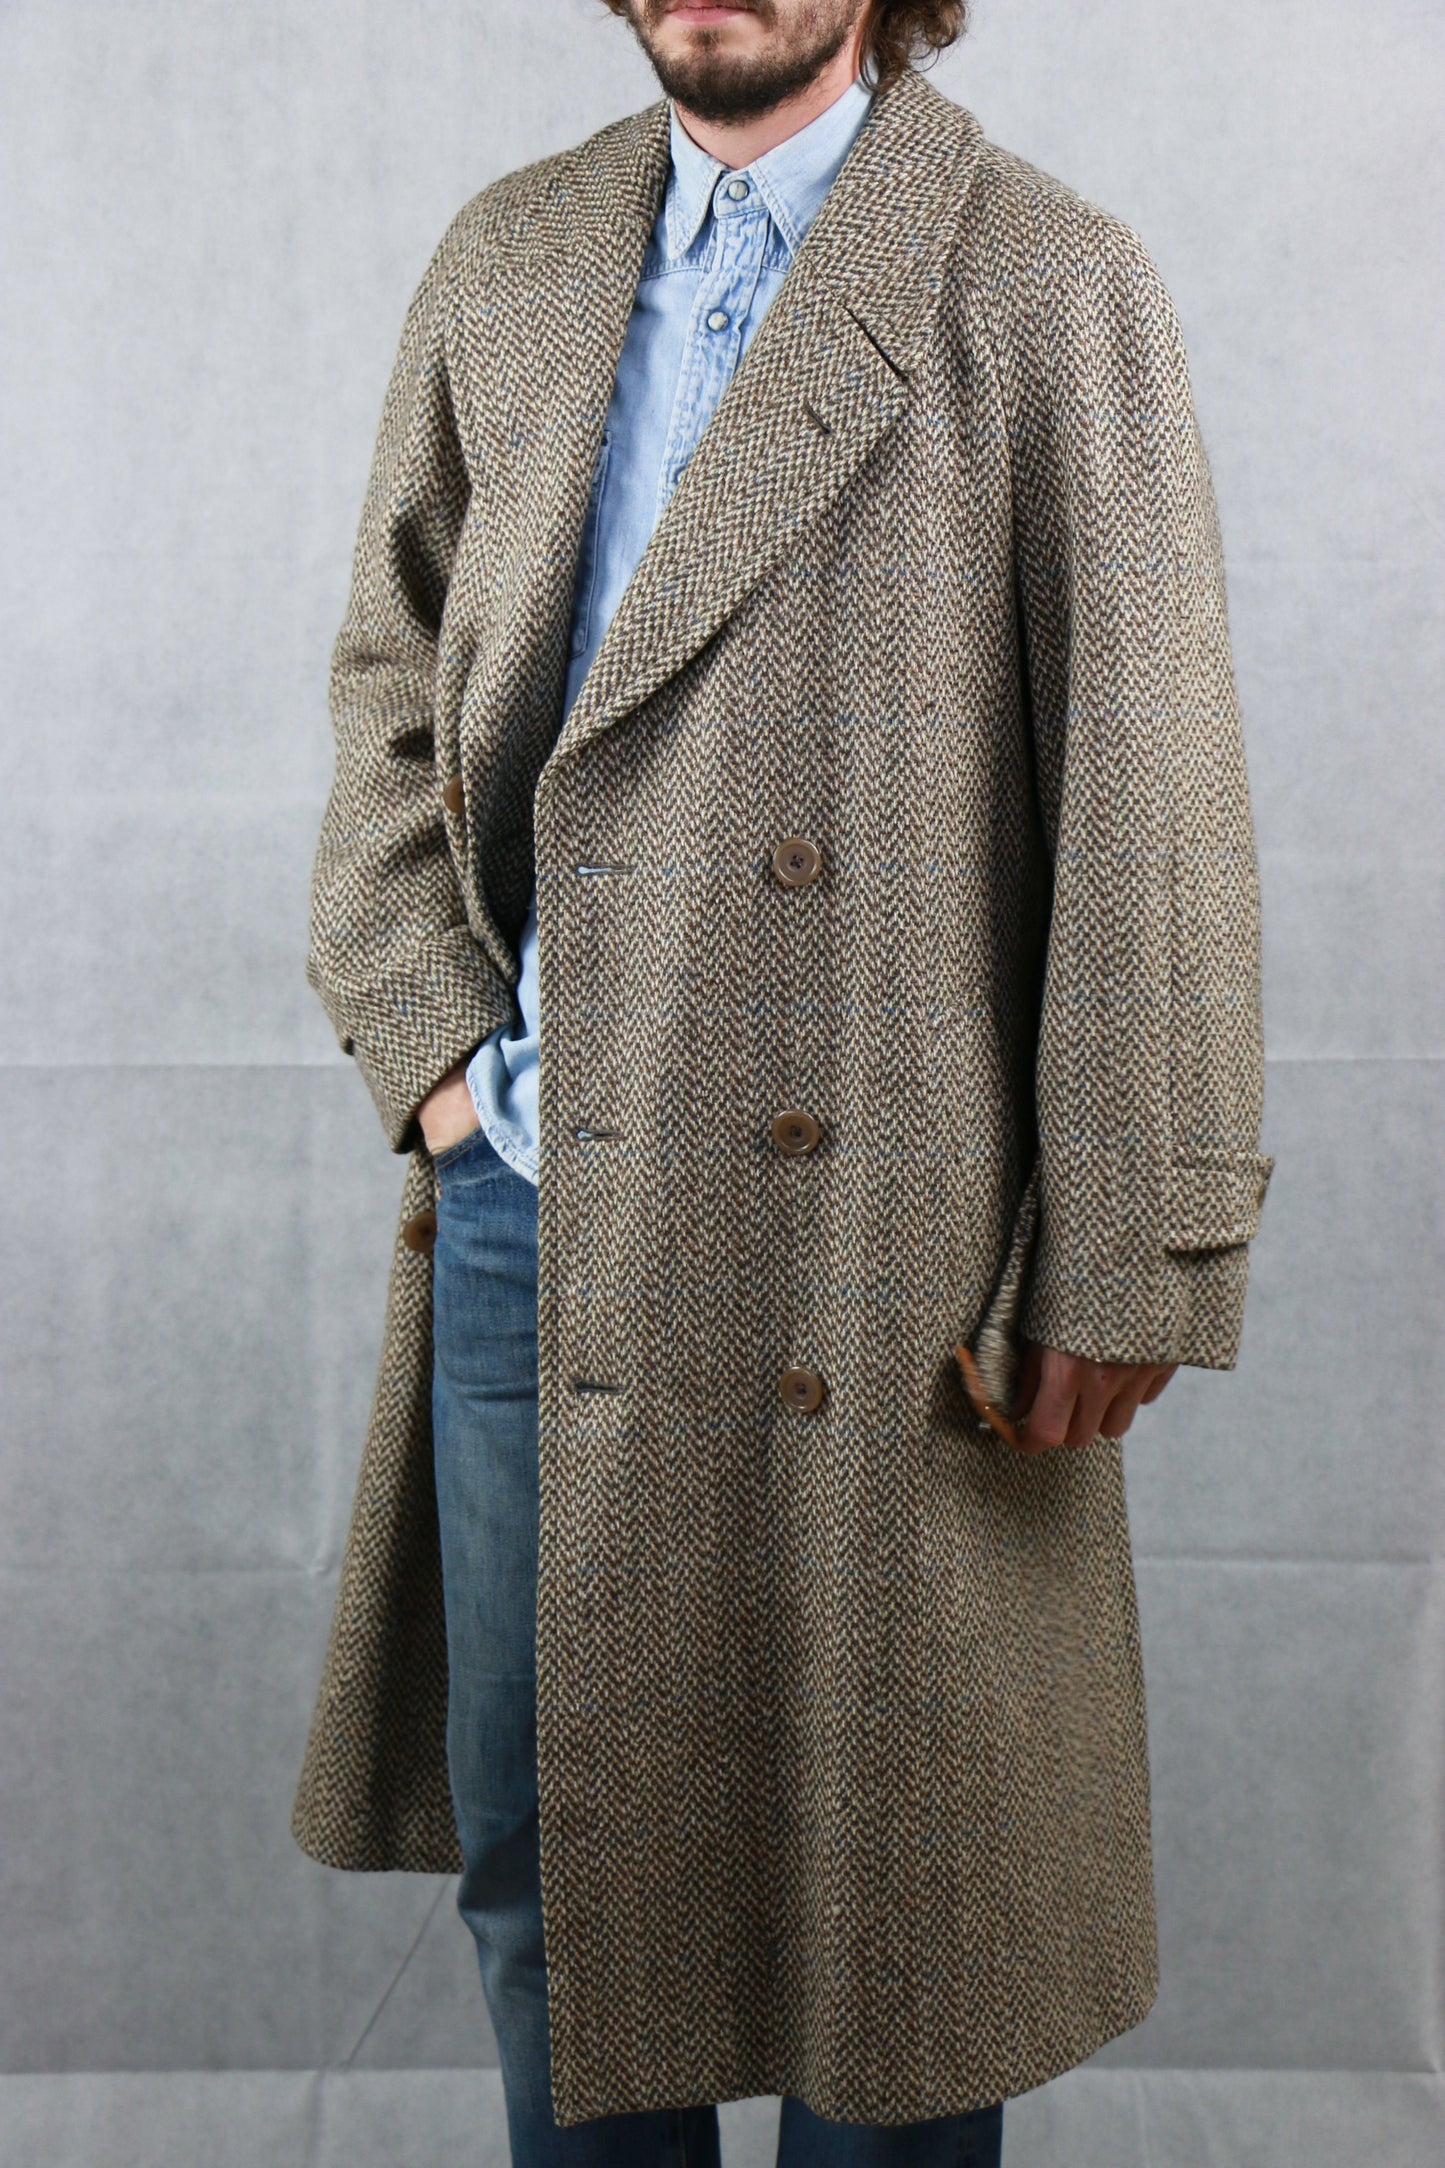 Aquascutum Double-breasted Tweed Coat - vintage clothing clochard92.com 